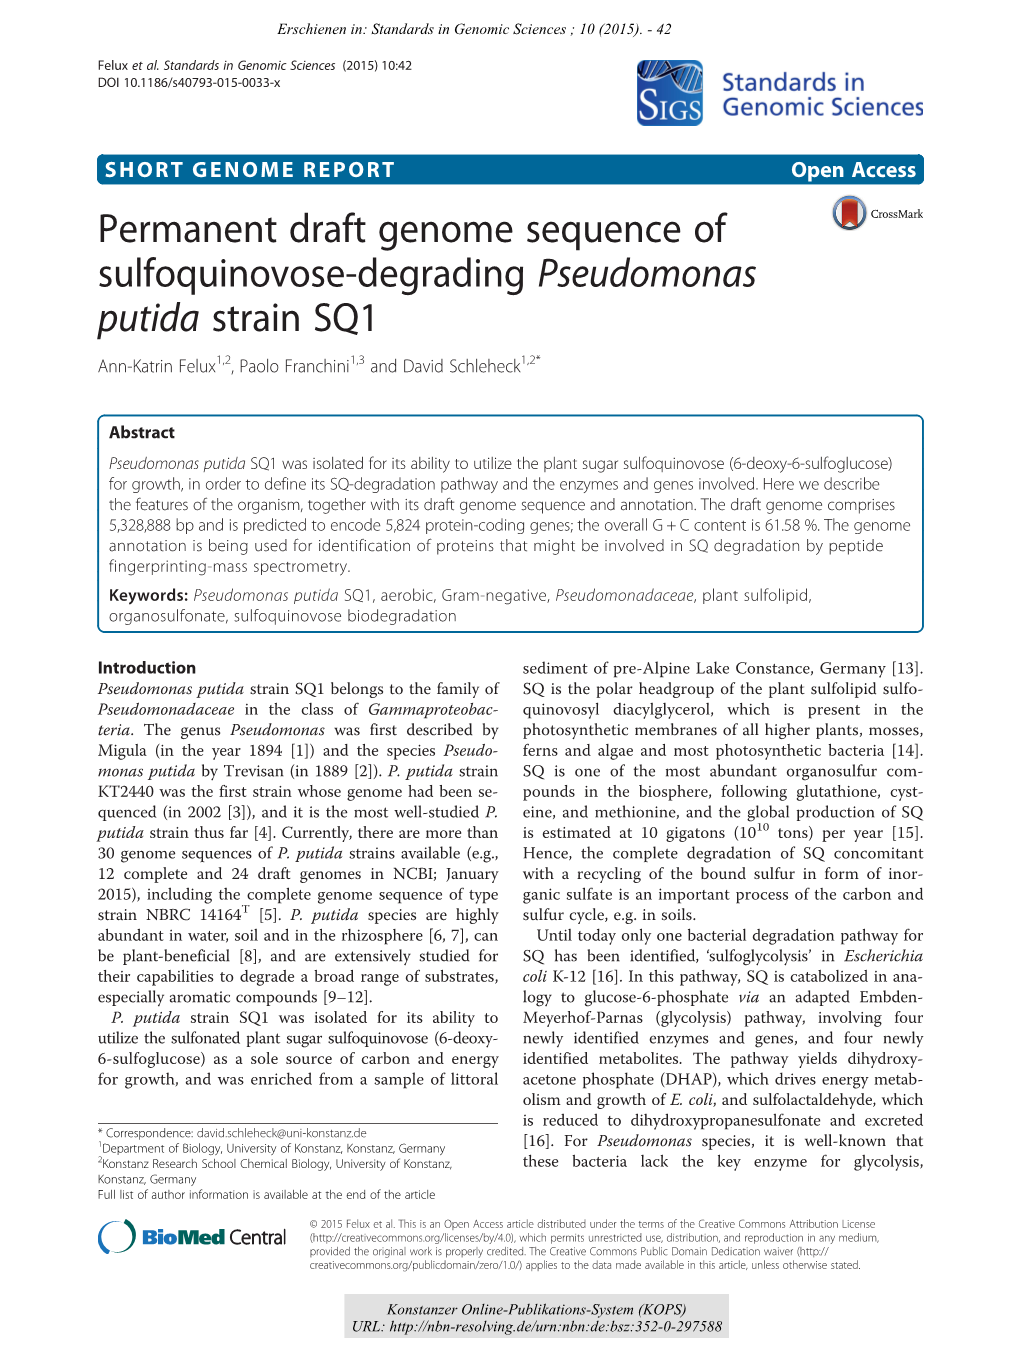 Permanent Draft Genome Sequence of Sulfoquinovose-Degrading Pseudomonas Putida Strain SQ1 Ann-Katrin Felux1,2, Paolo Franchini1,3 and David Schleheck1,2*